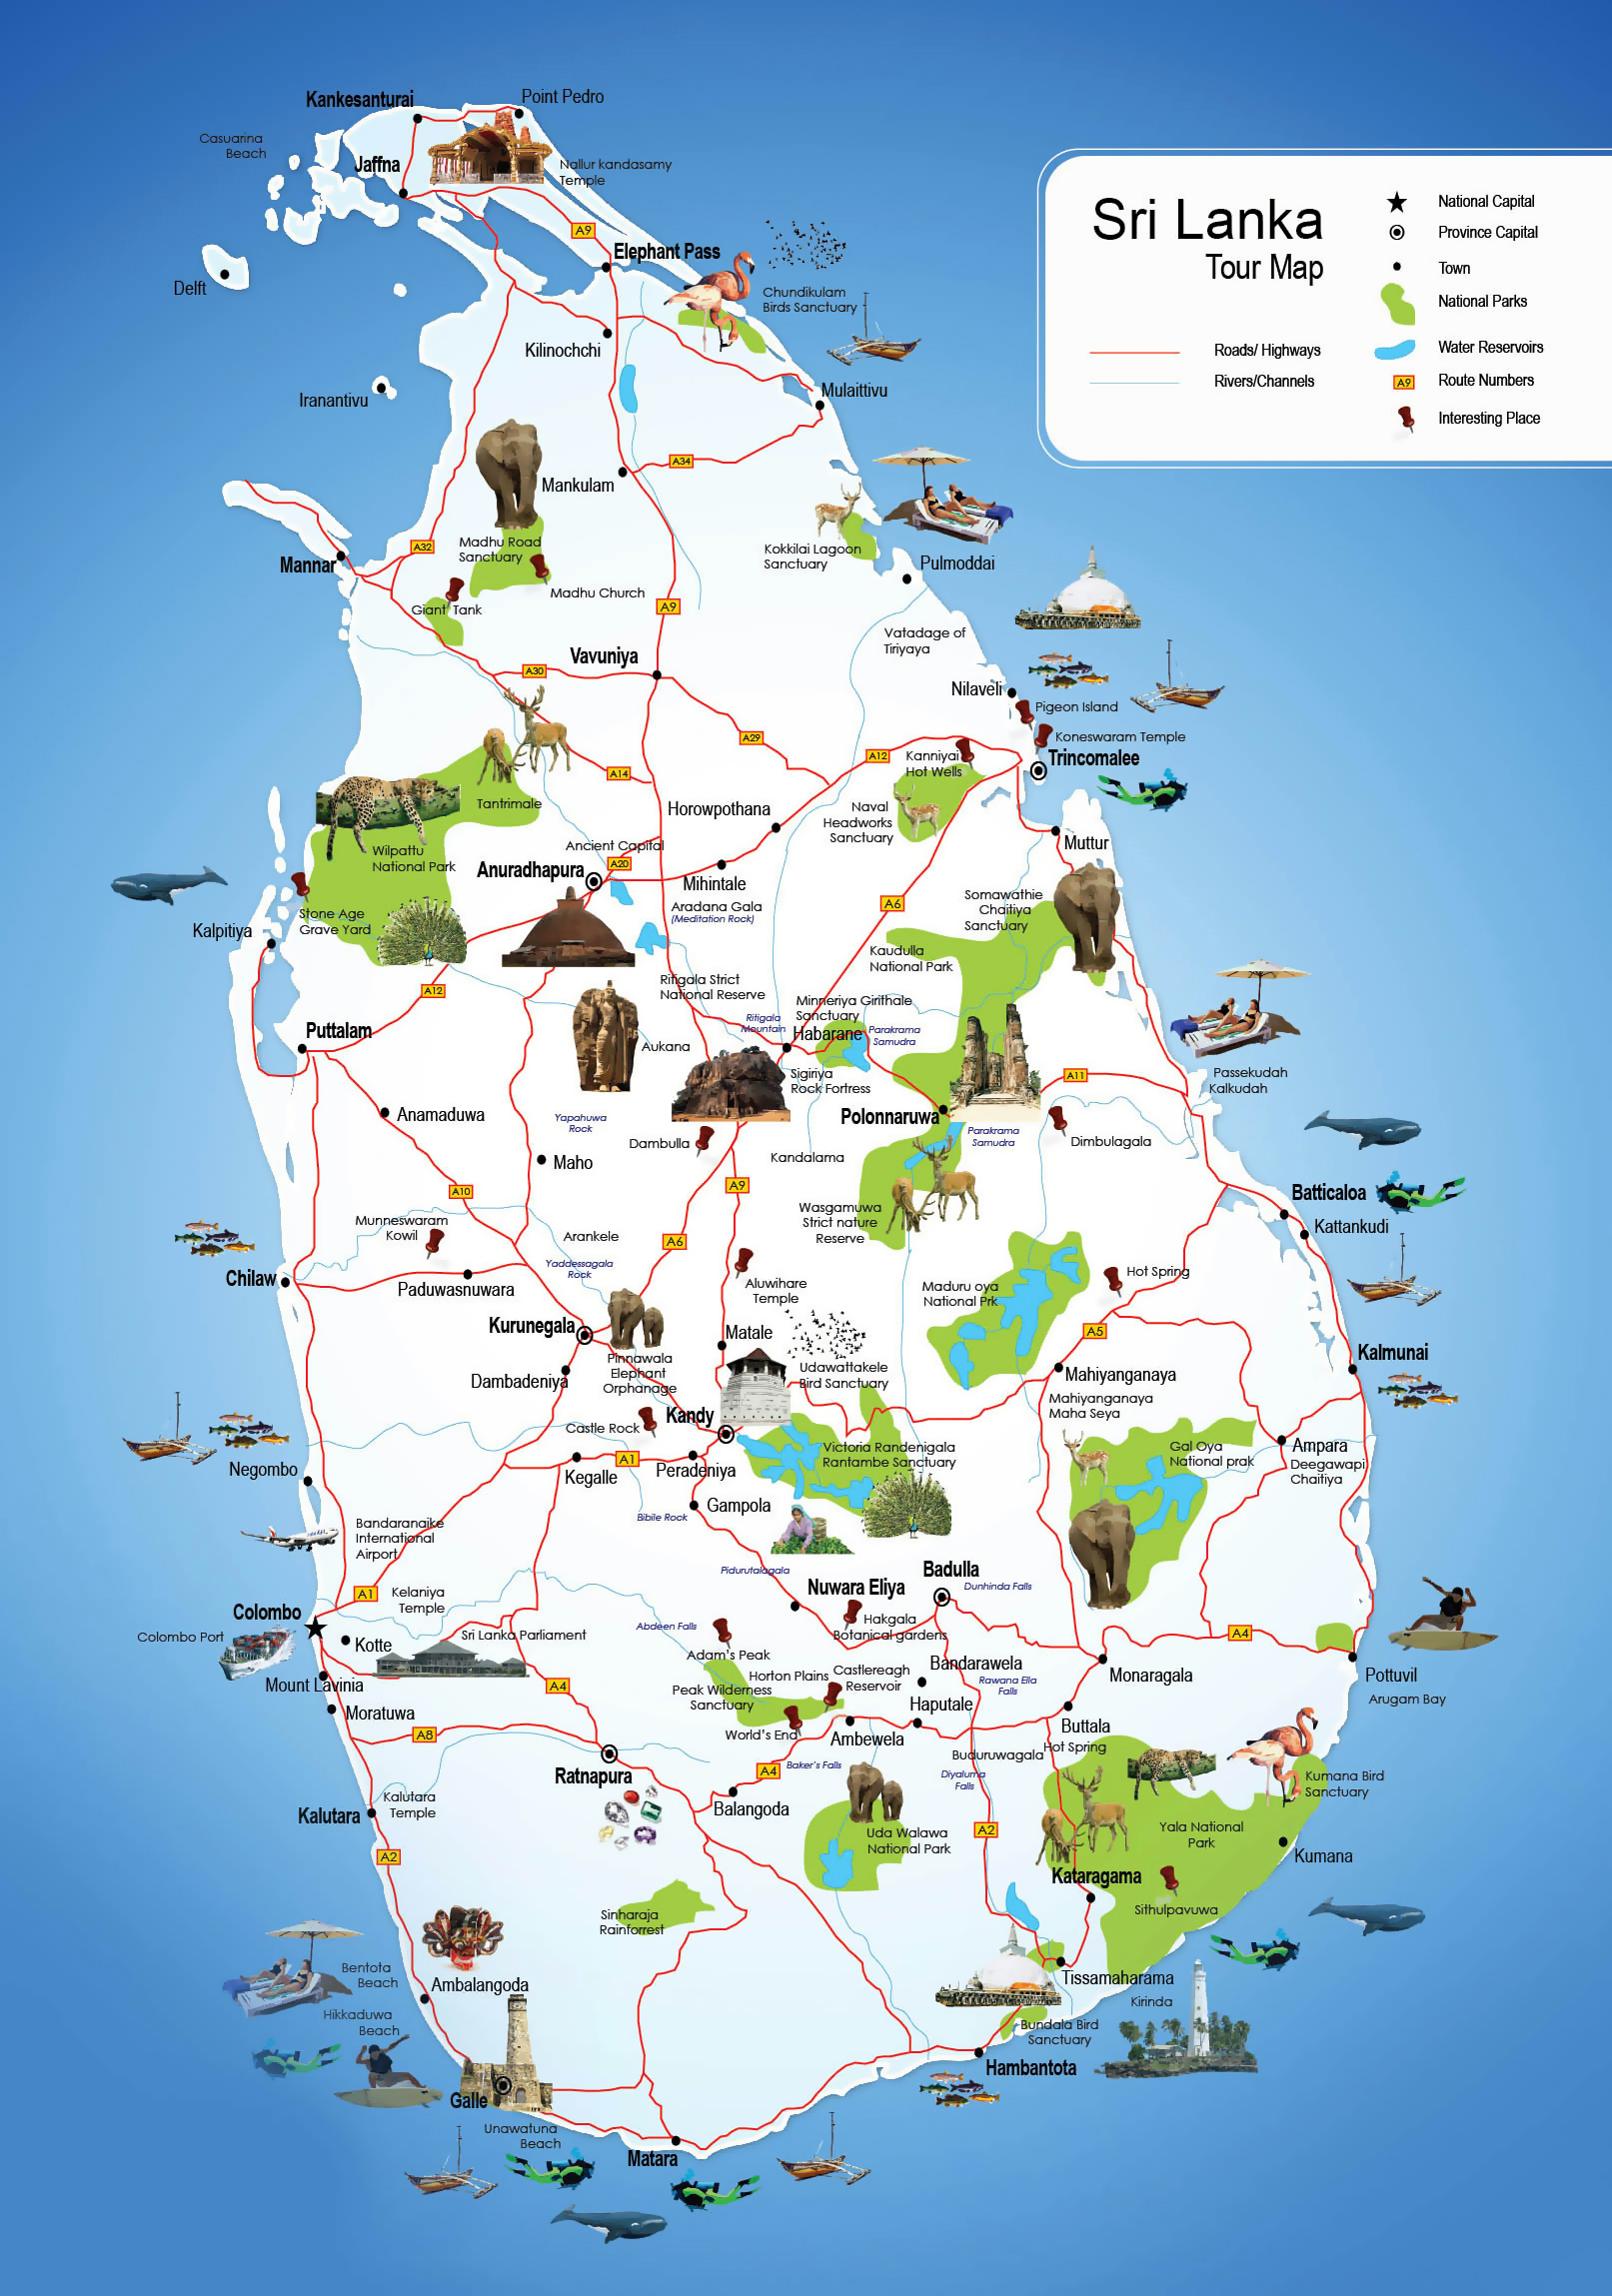 tourism cities in sri lanka